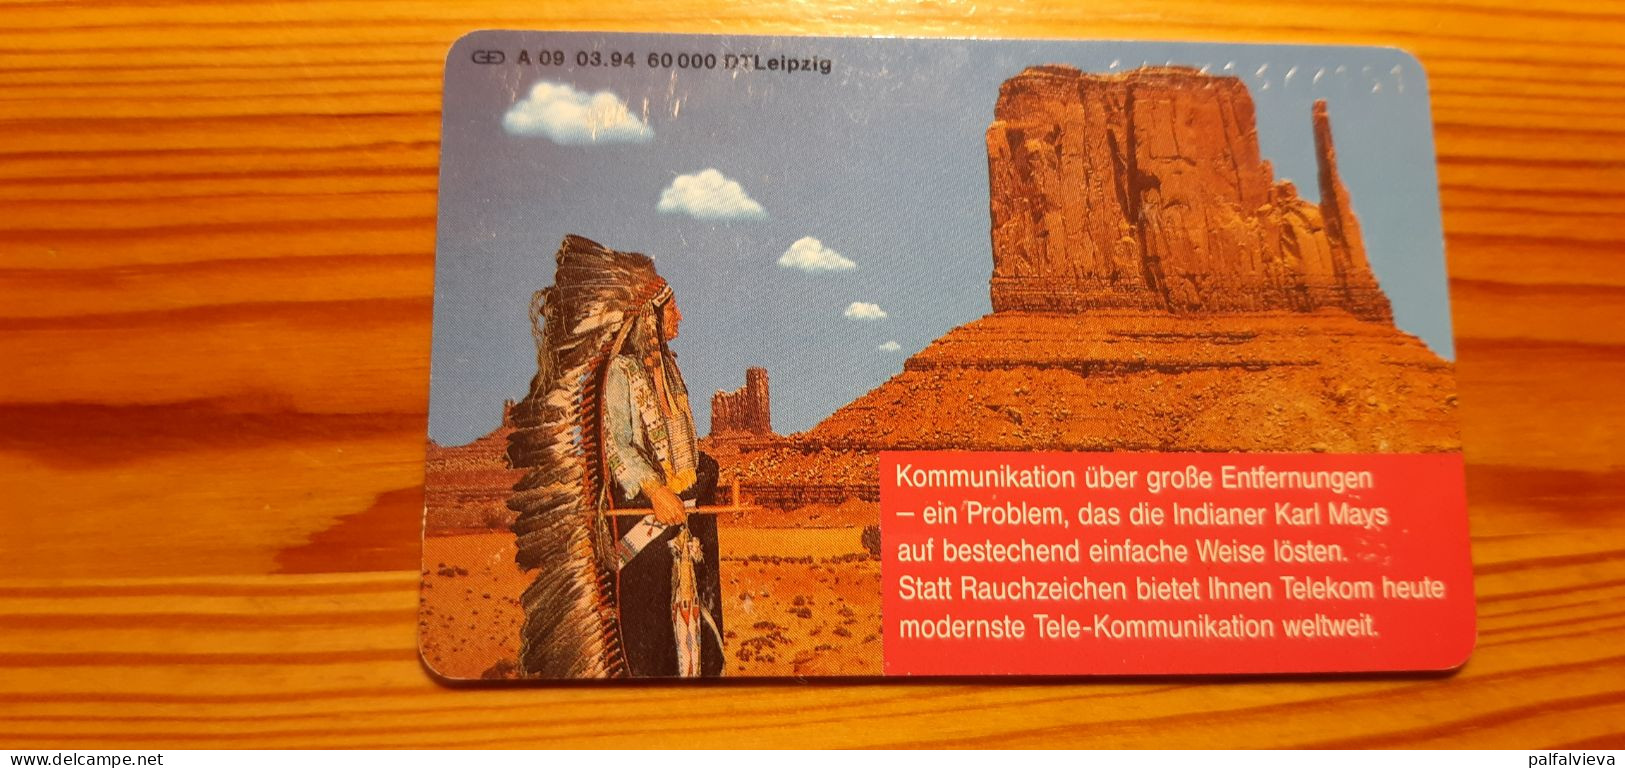 Phonecard Germany A 09 03.94. Karl May, Native American, USA 60.000 Ex. - A + AD-Series : D. Telekom AG Advertisement